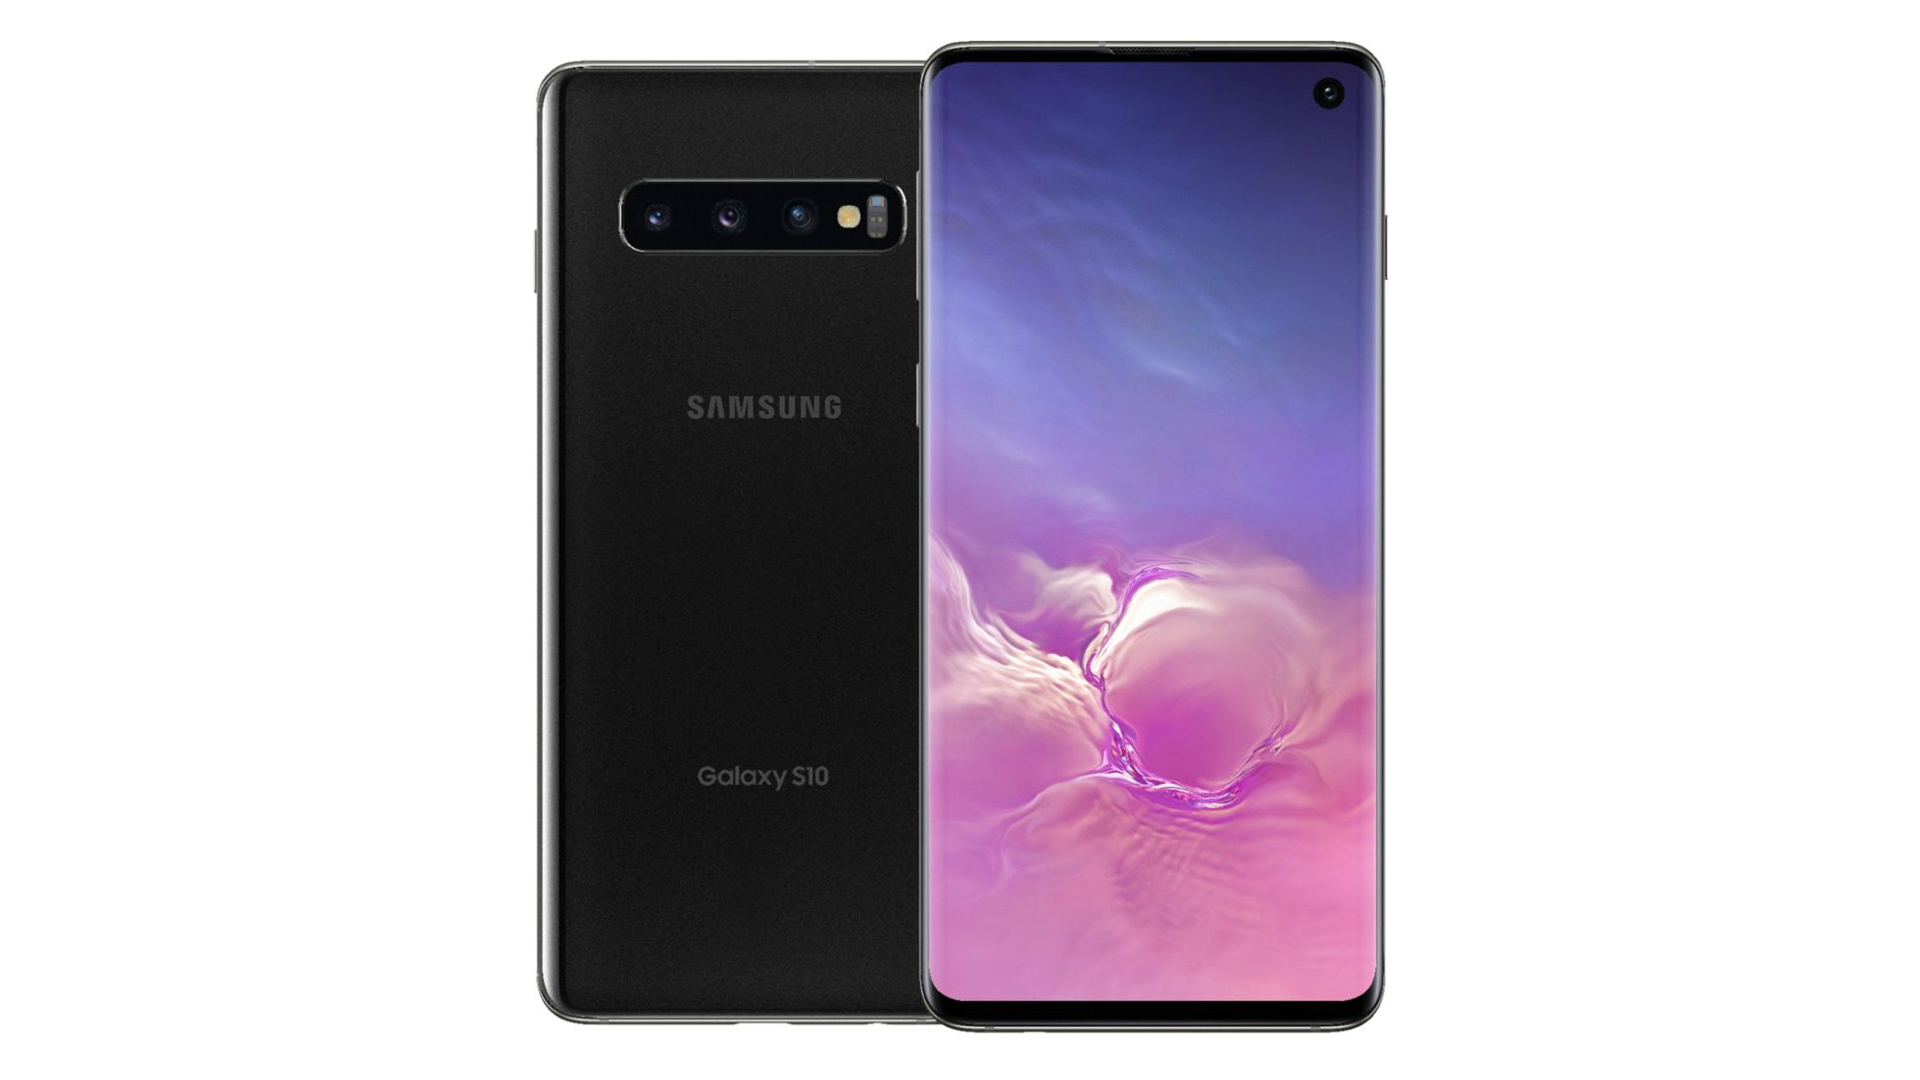 Samsung Galaxy S10 press render